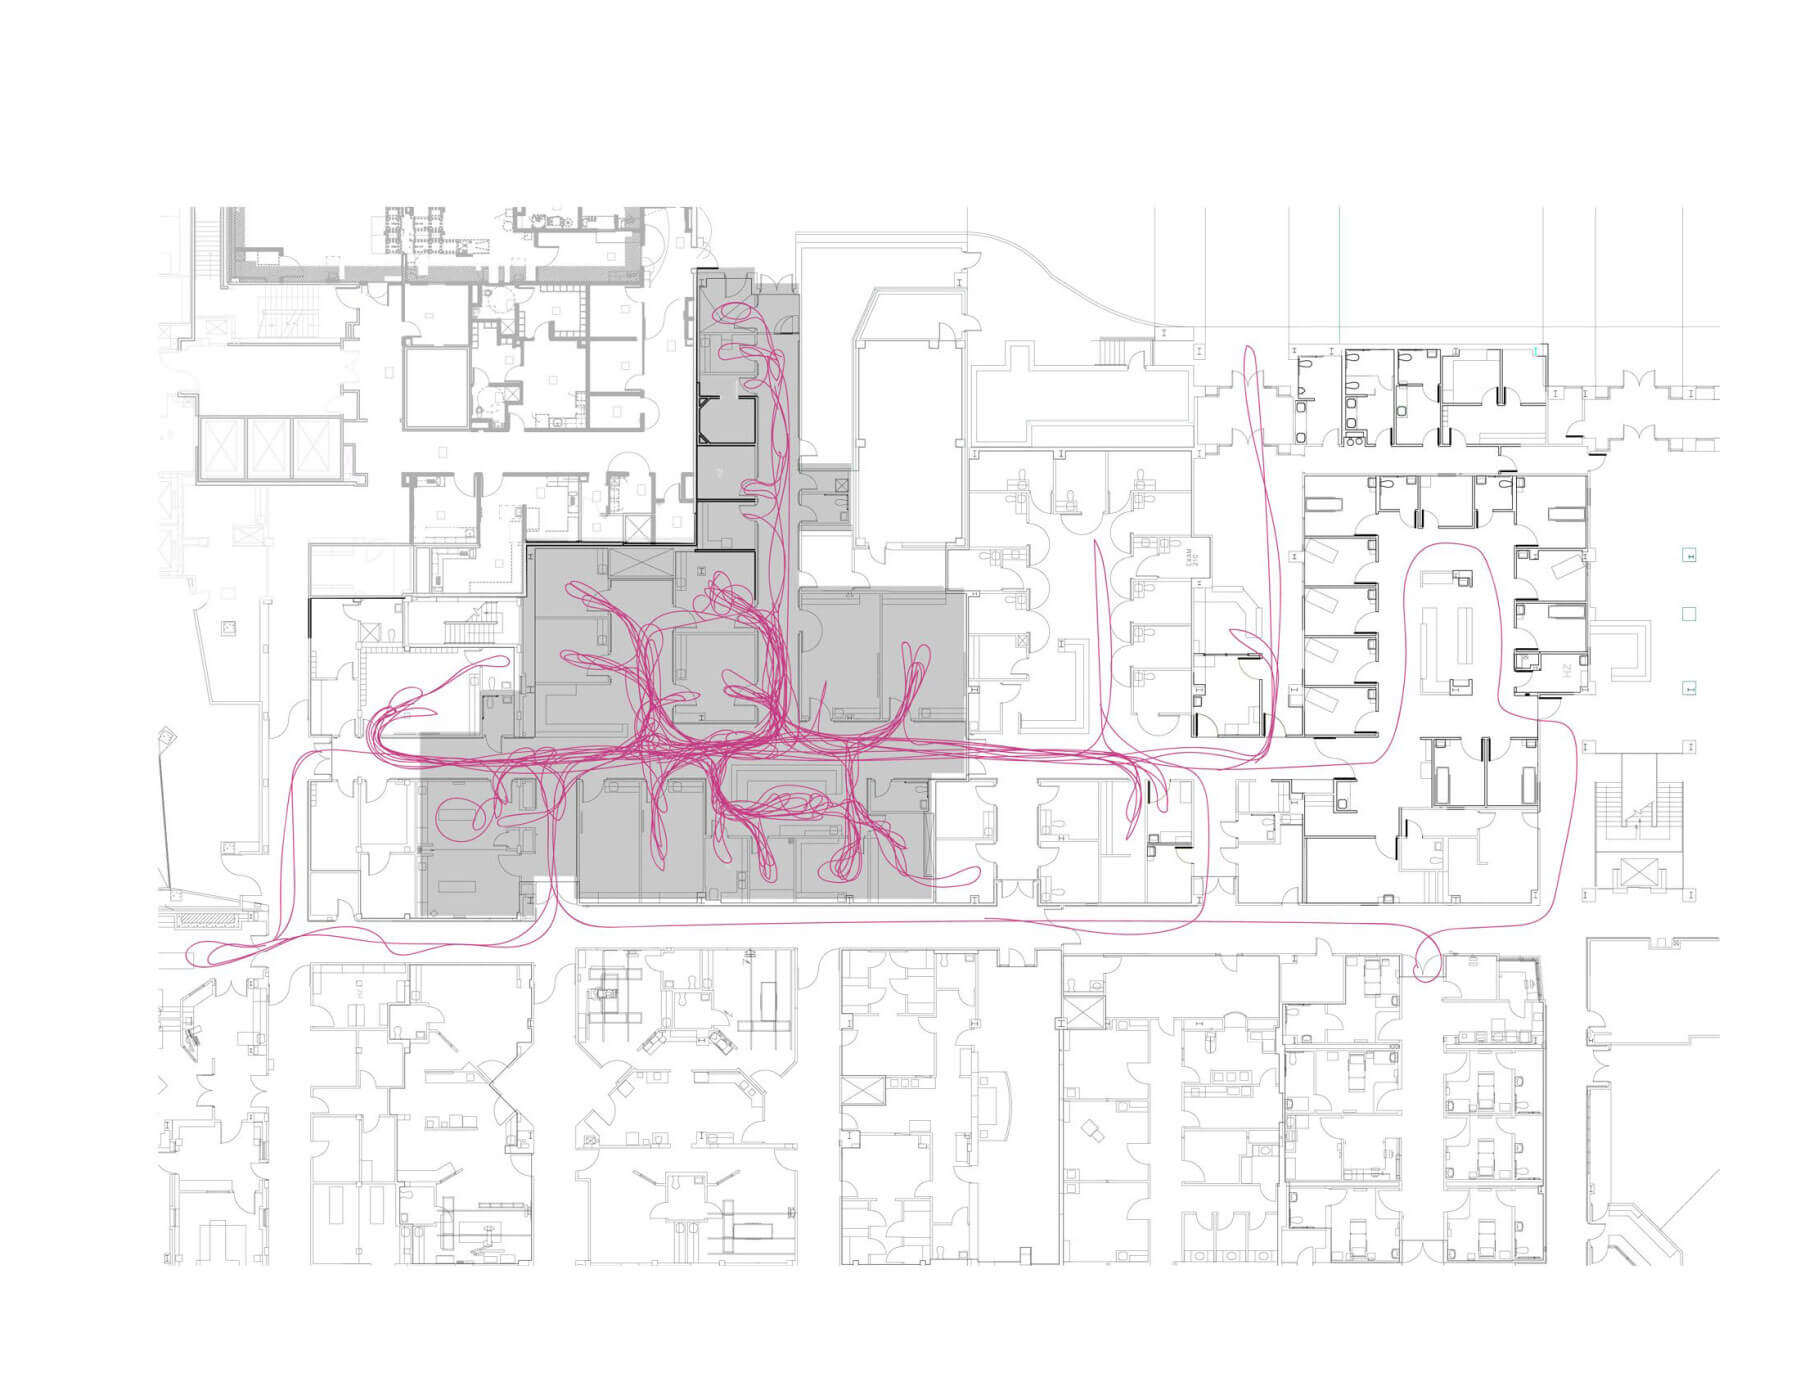 a floorplan showing walking routes during behavior mapping